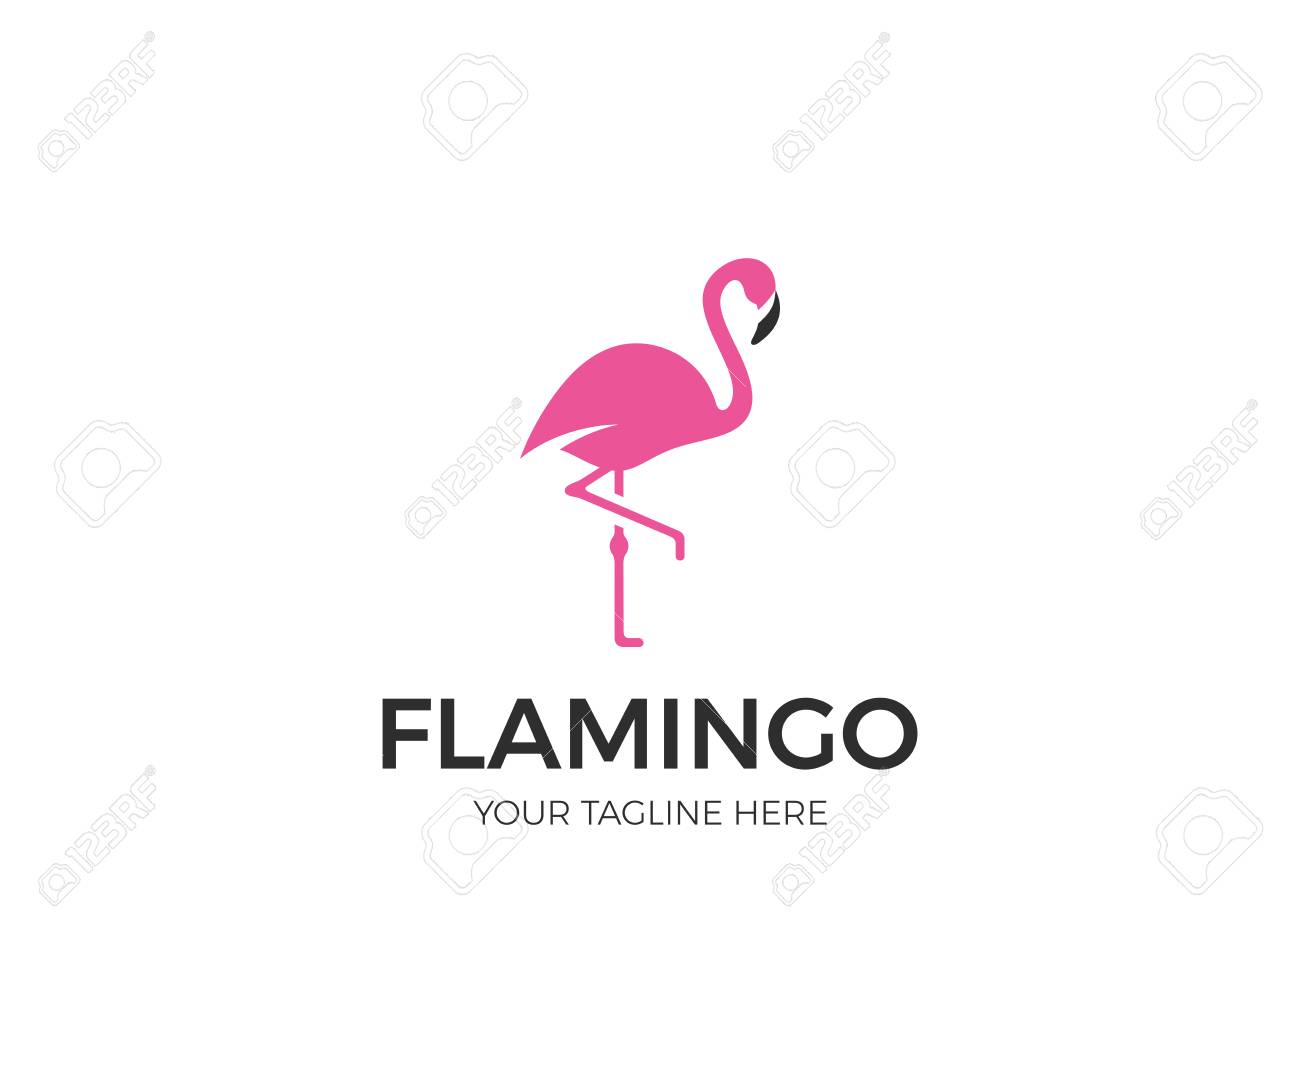 FLAMINGO - FLAMINGO